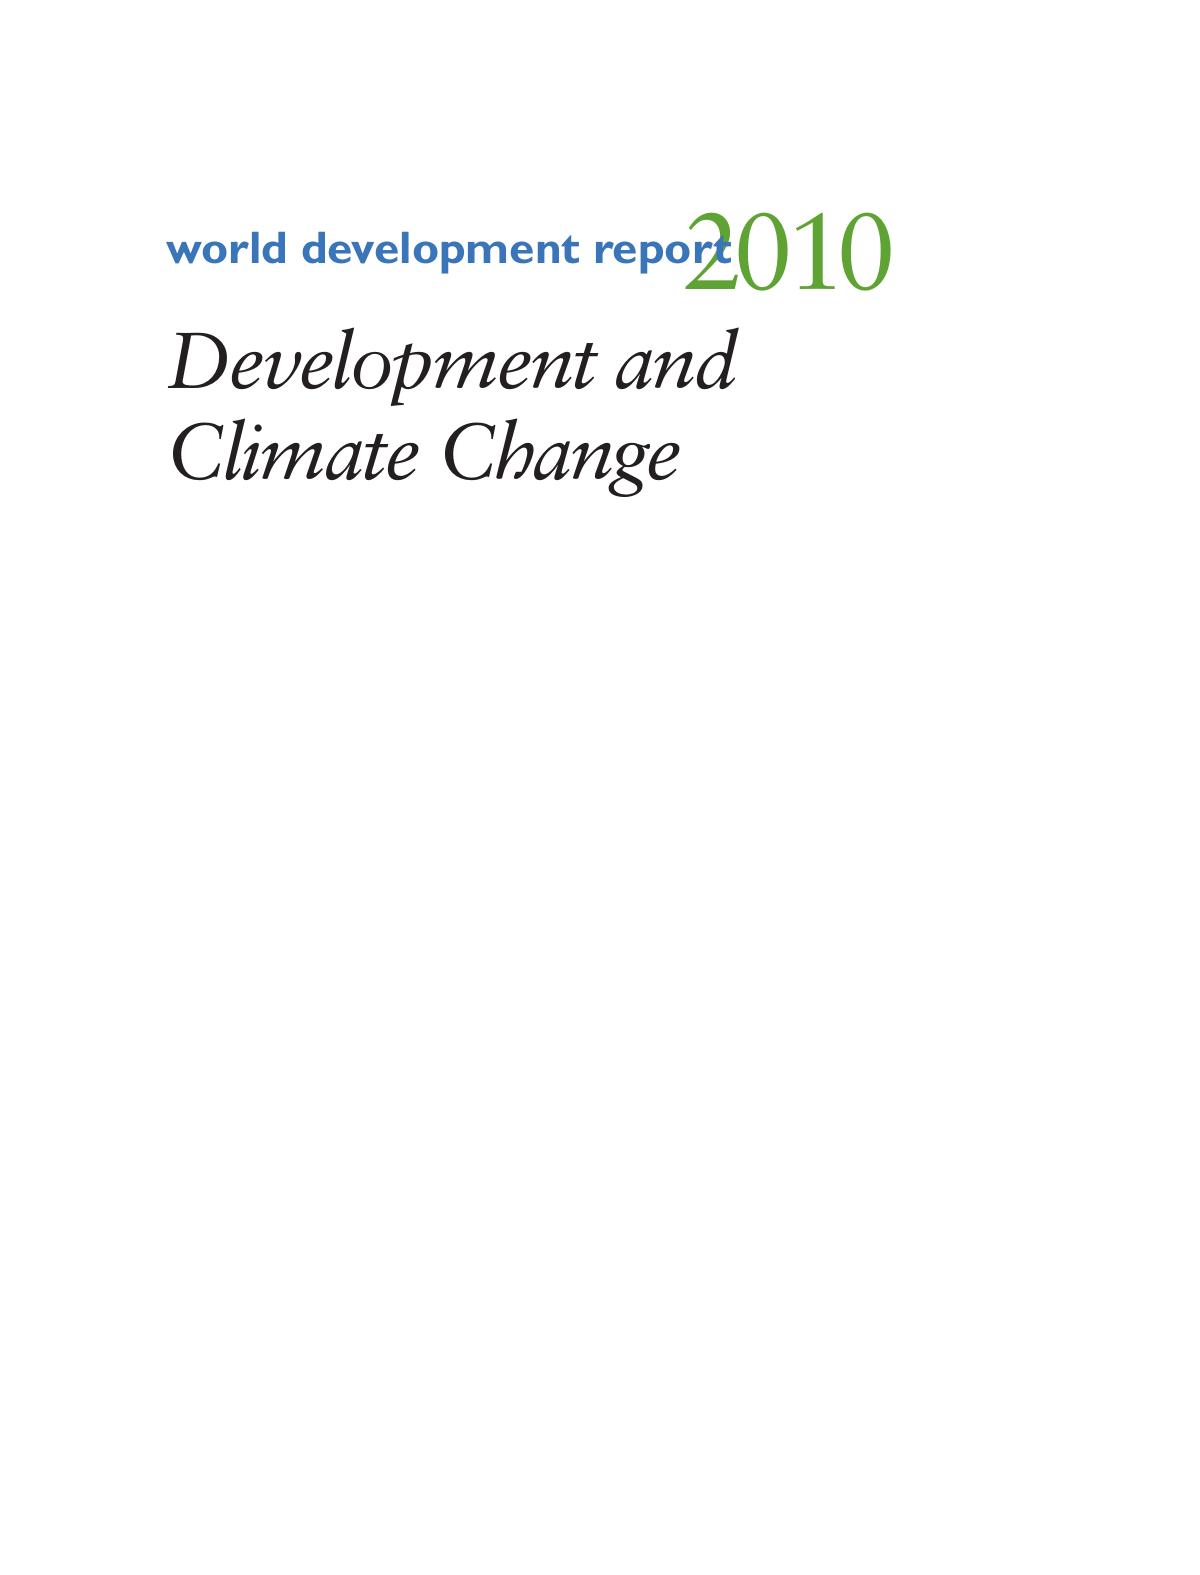 Development and climate change- world development report 2010